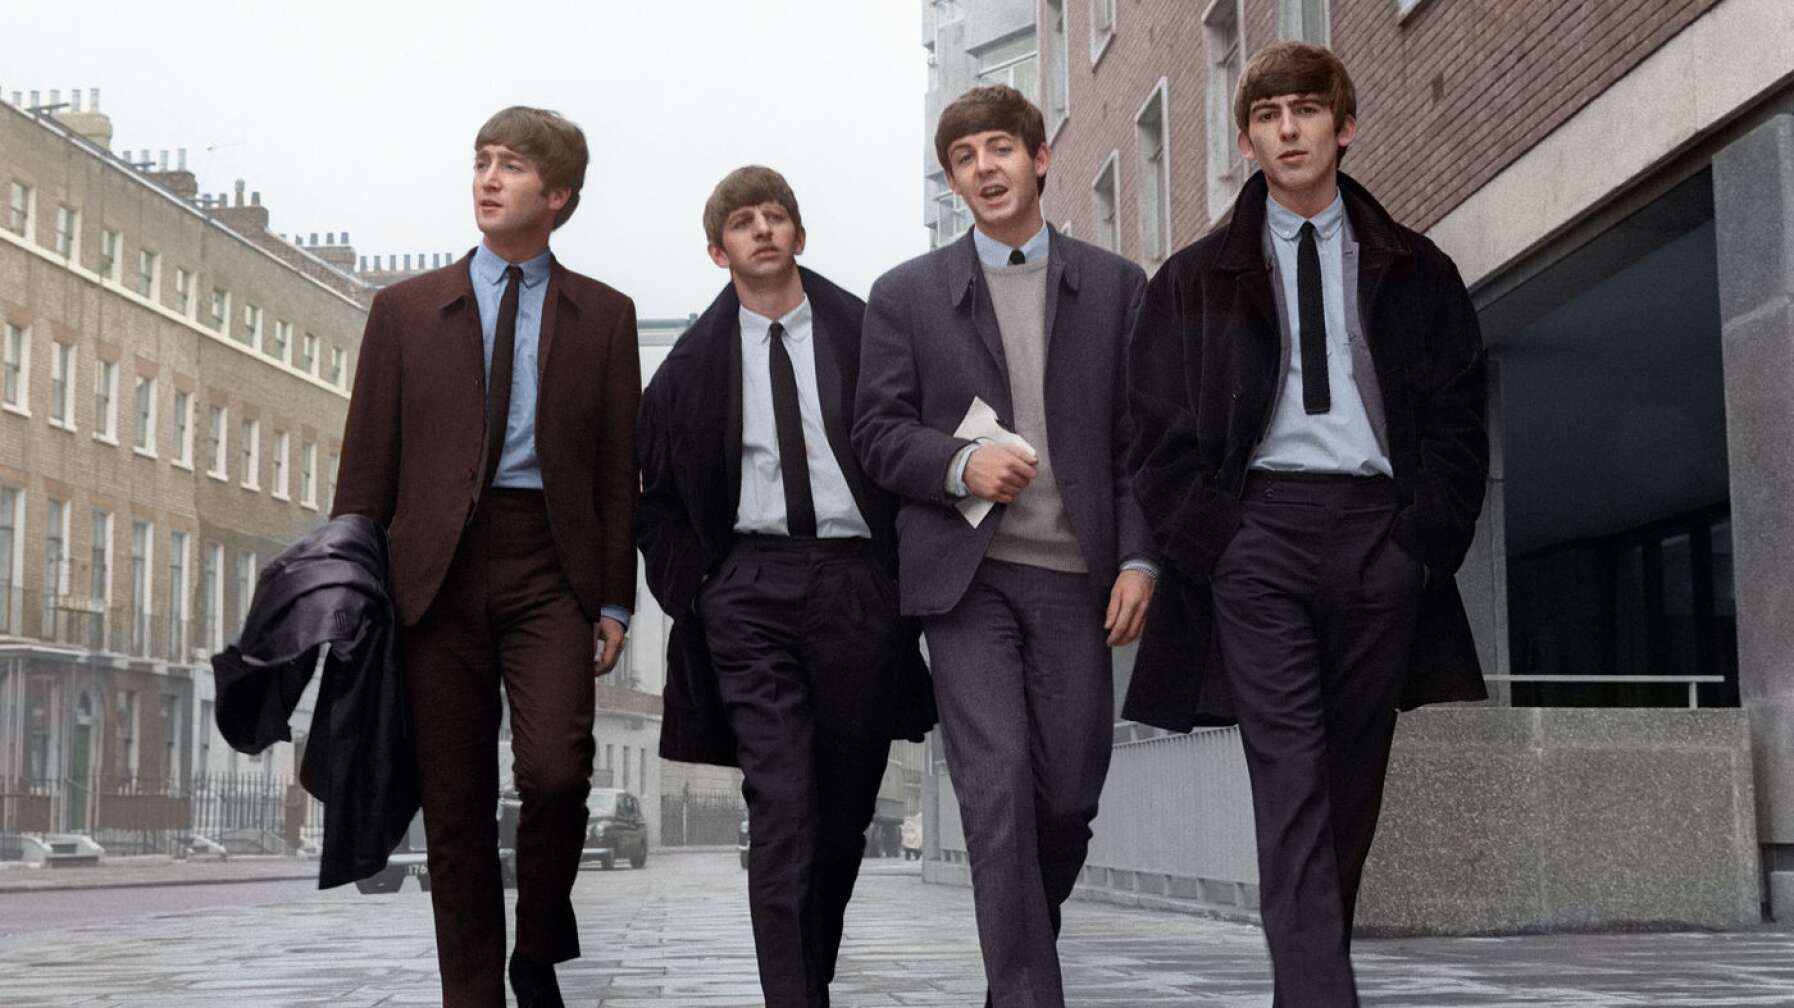 Beatles on the street